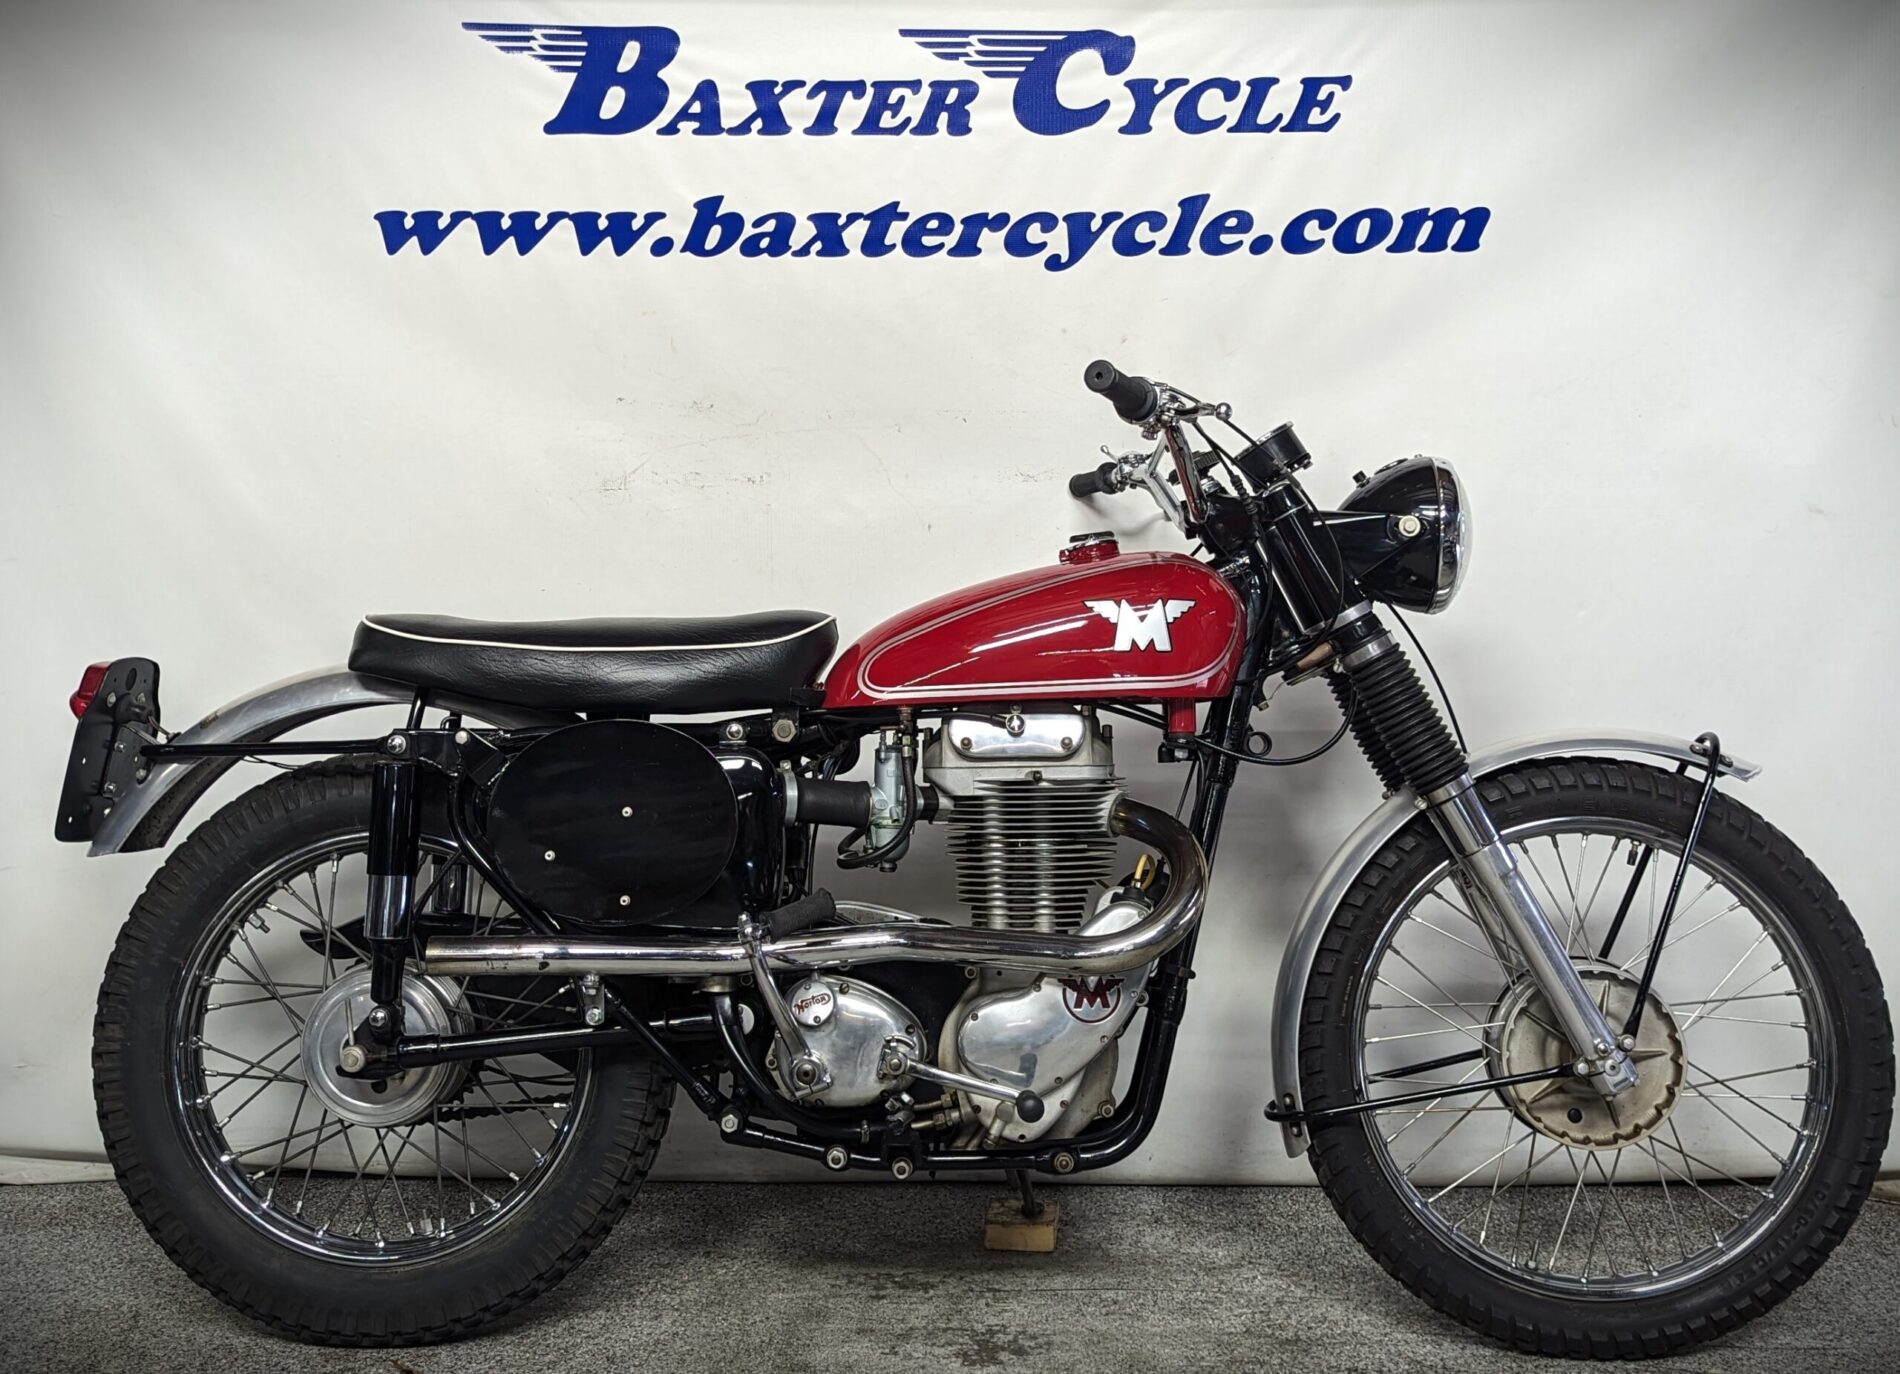 Simichrome Polish – Baxter Cycle